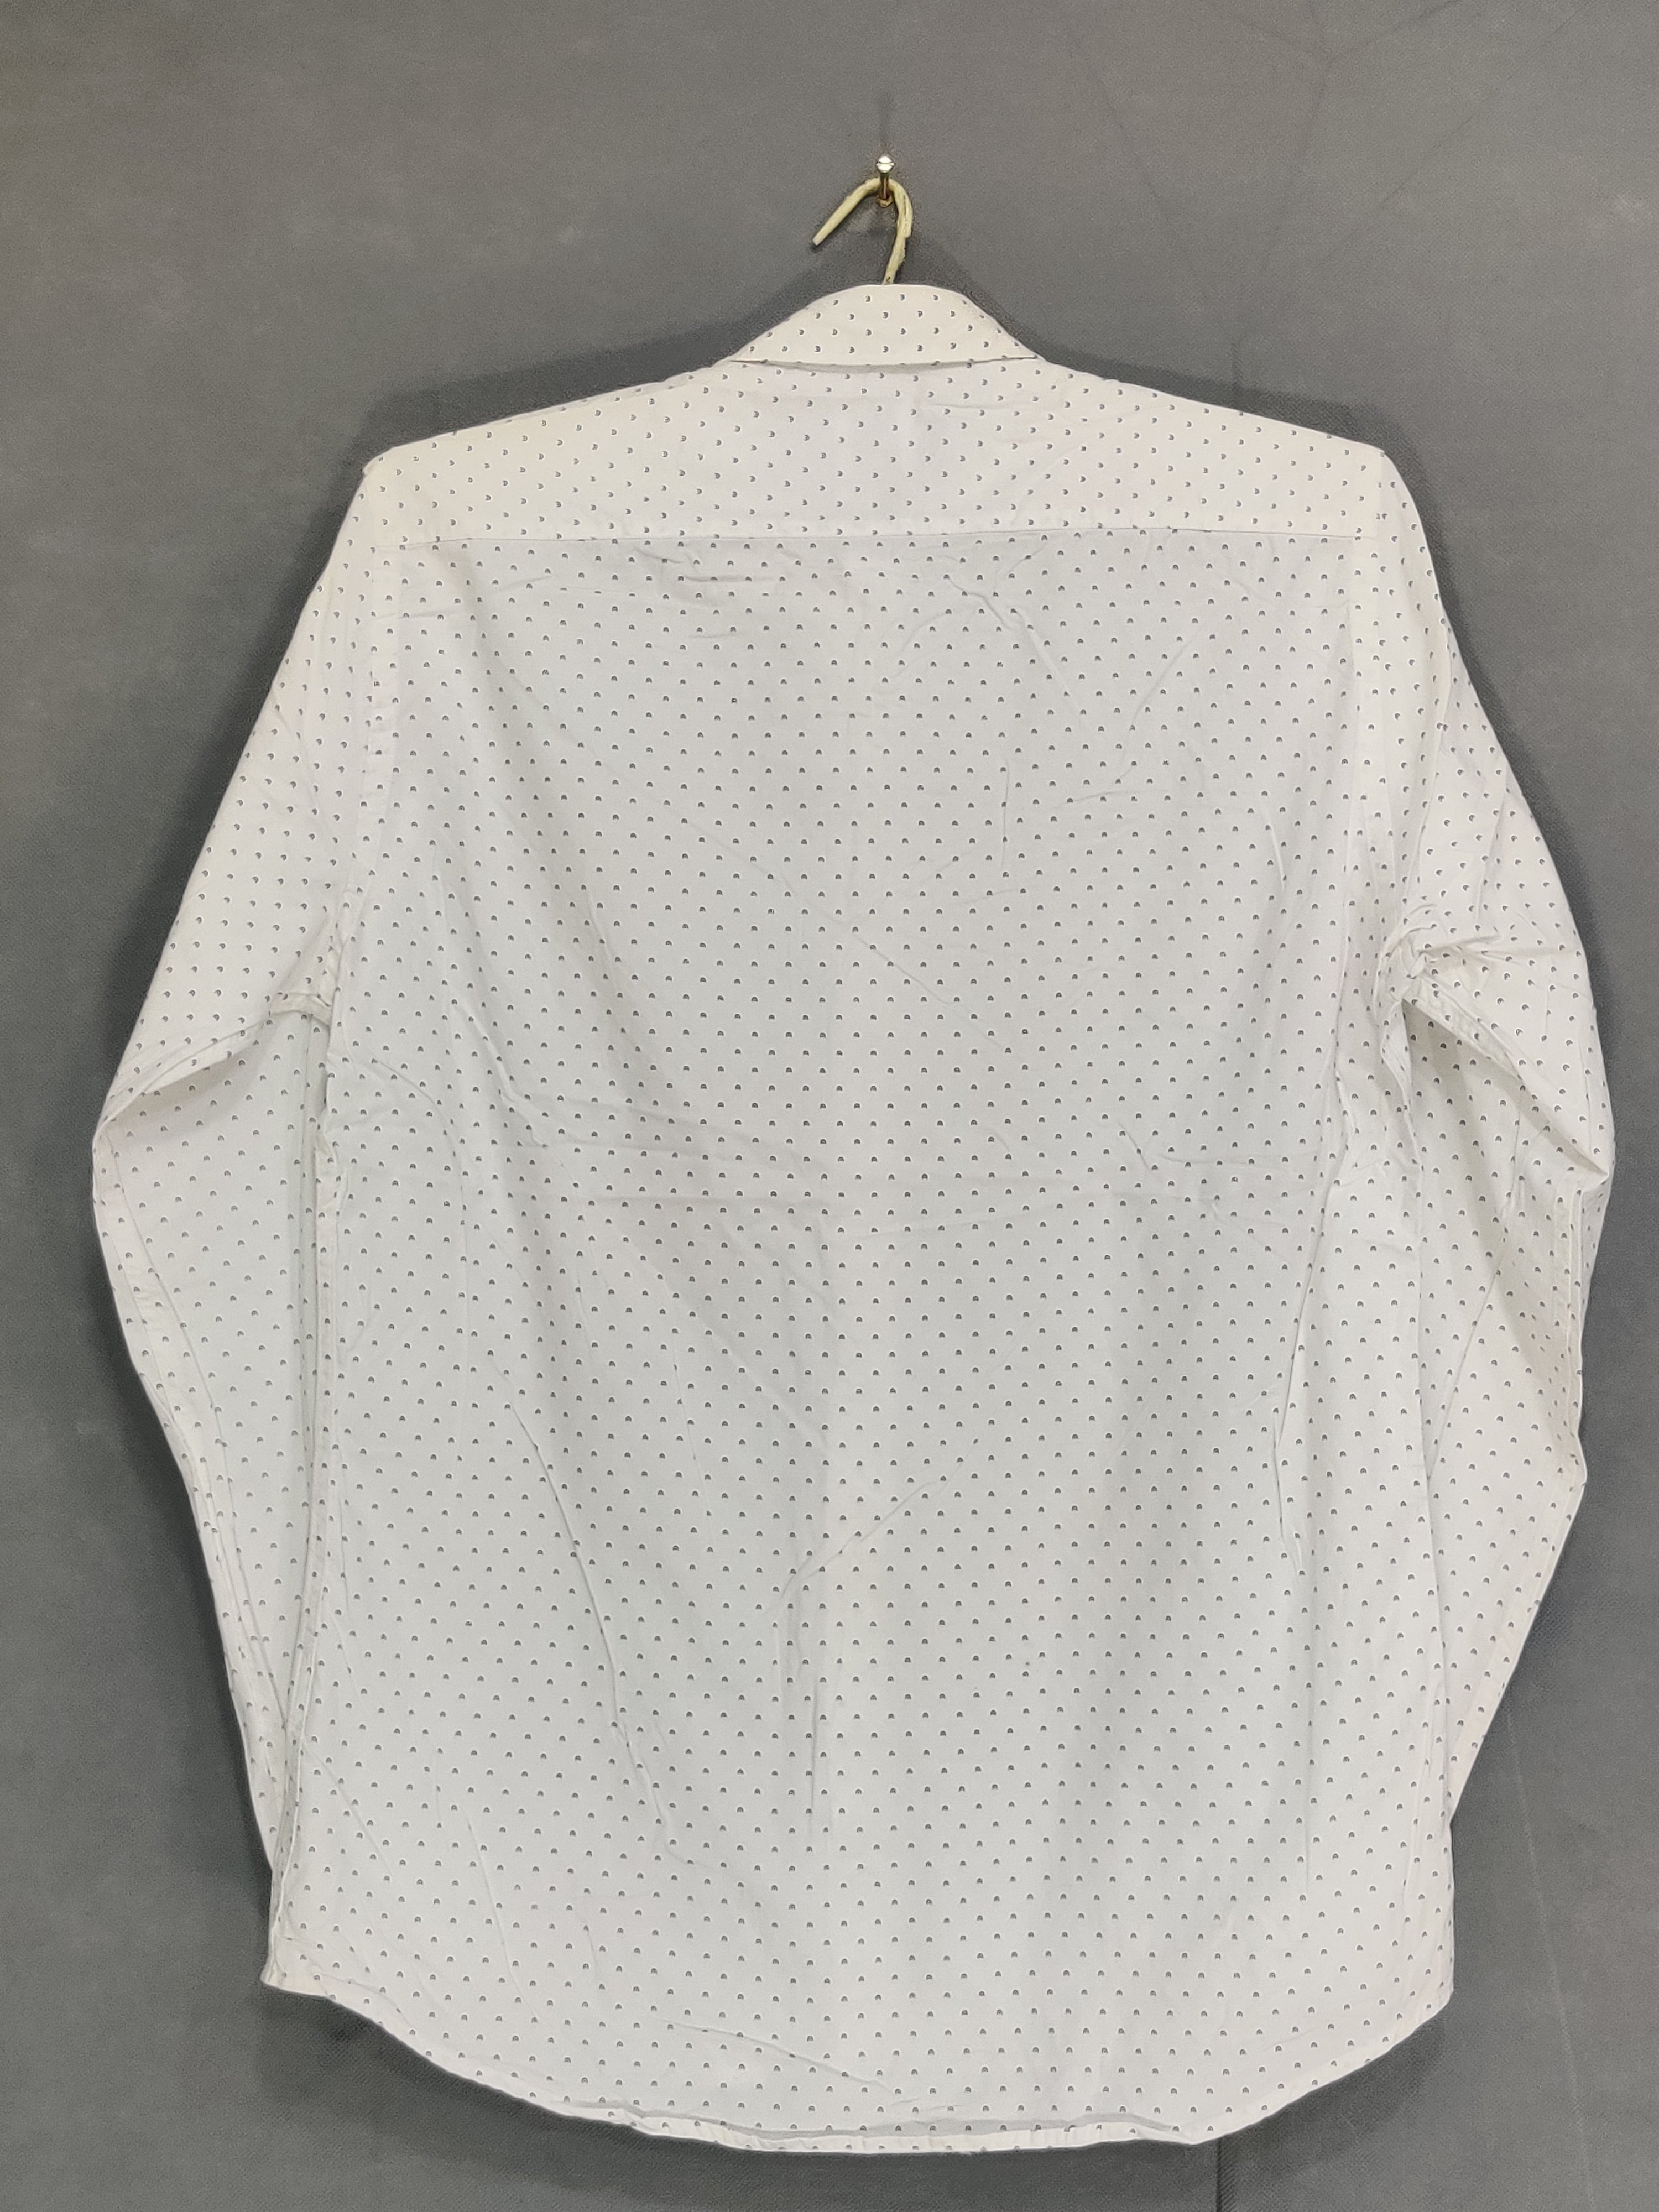 Zara Branded Original Cotton Shirt For Men